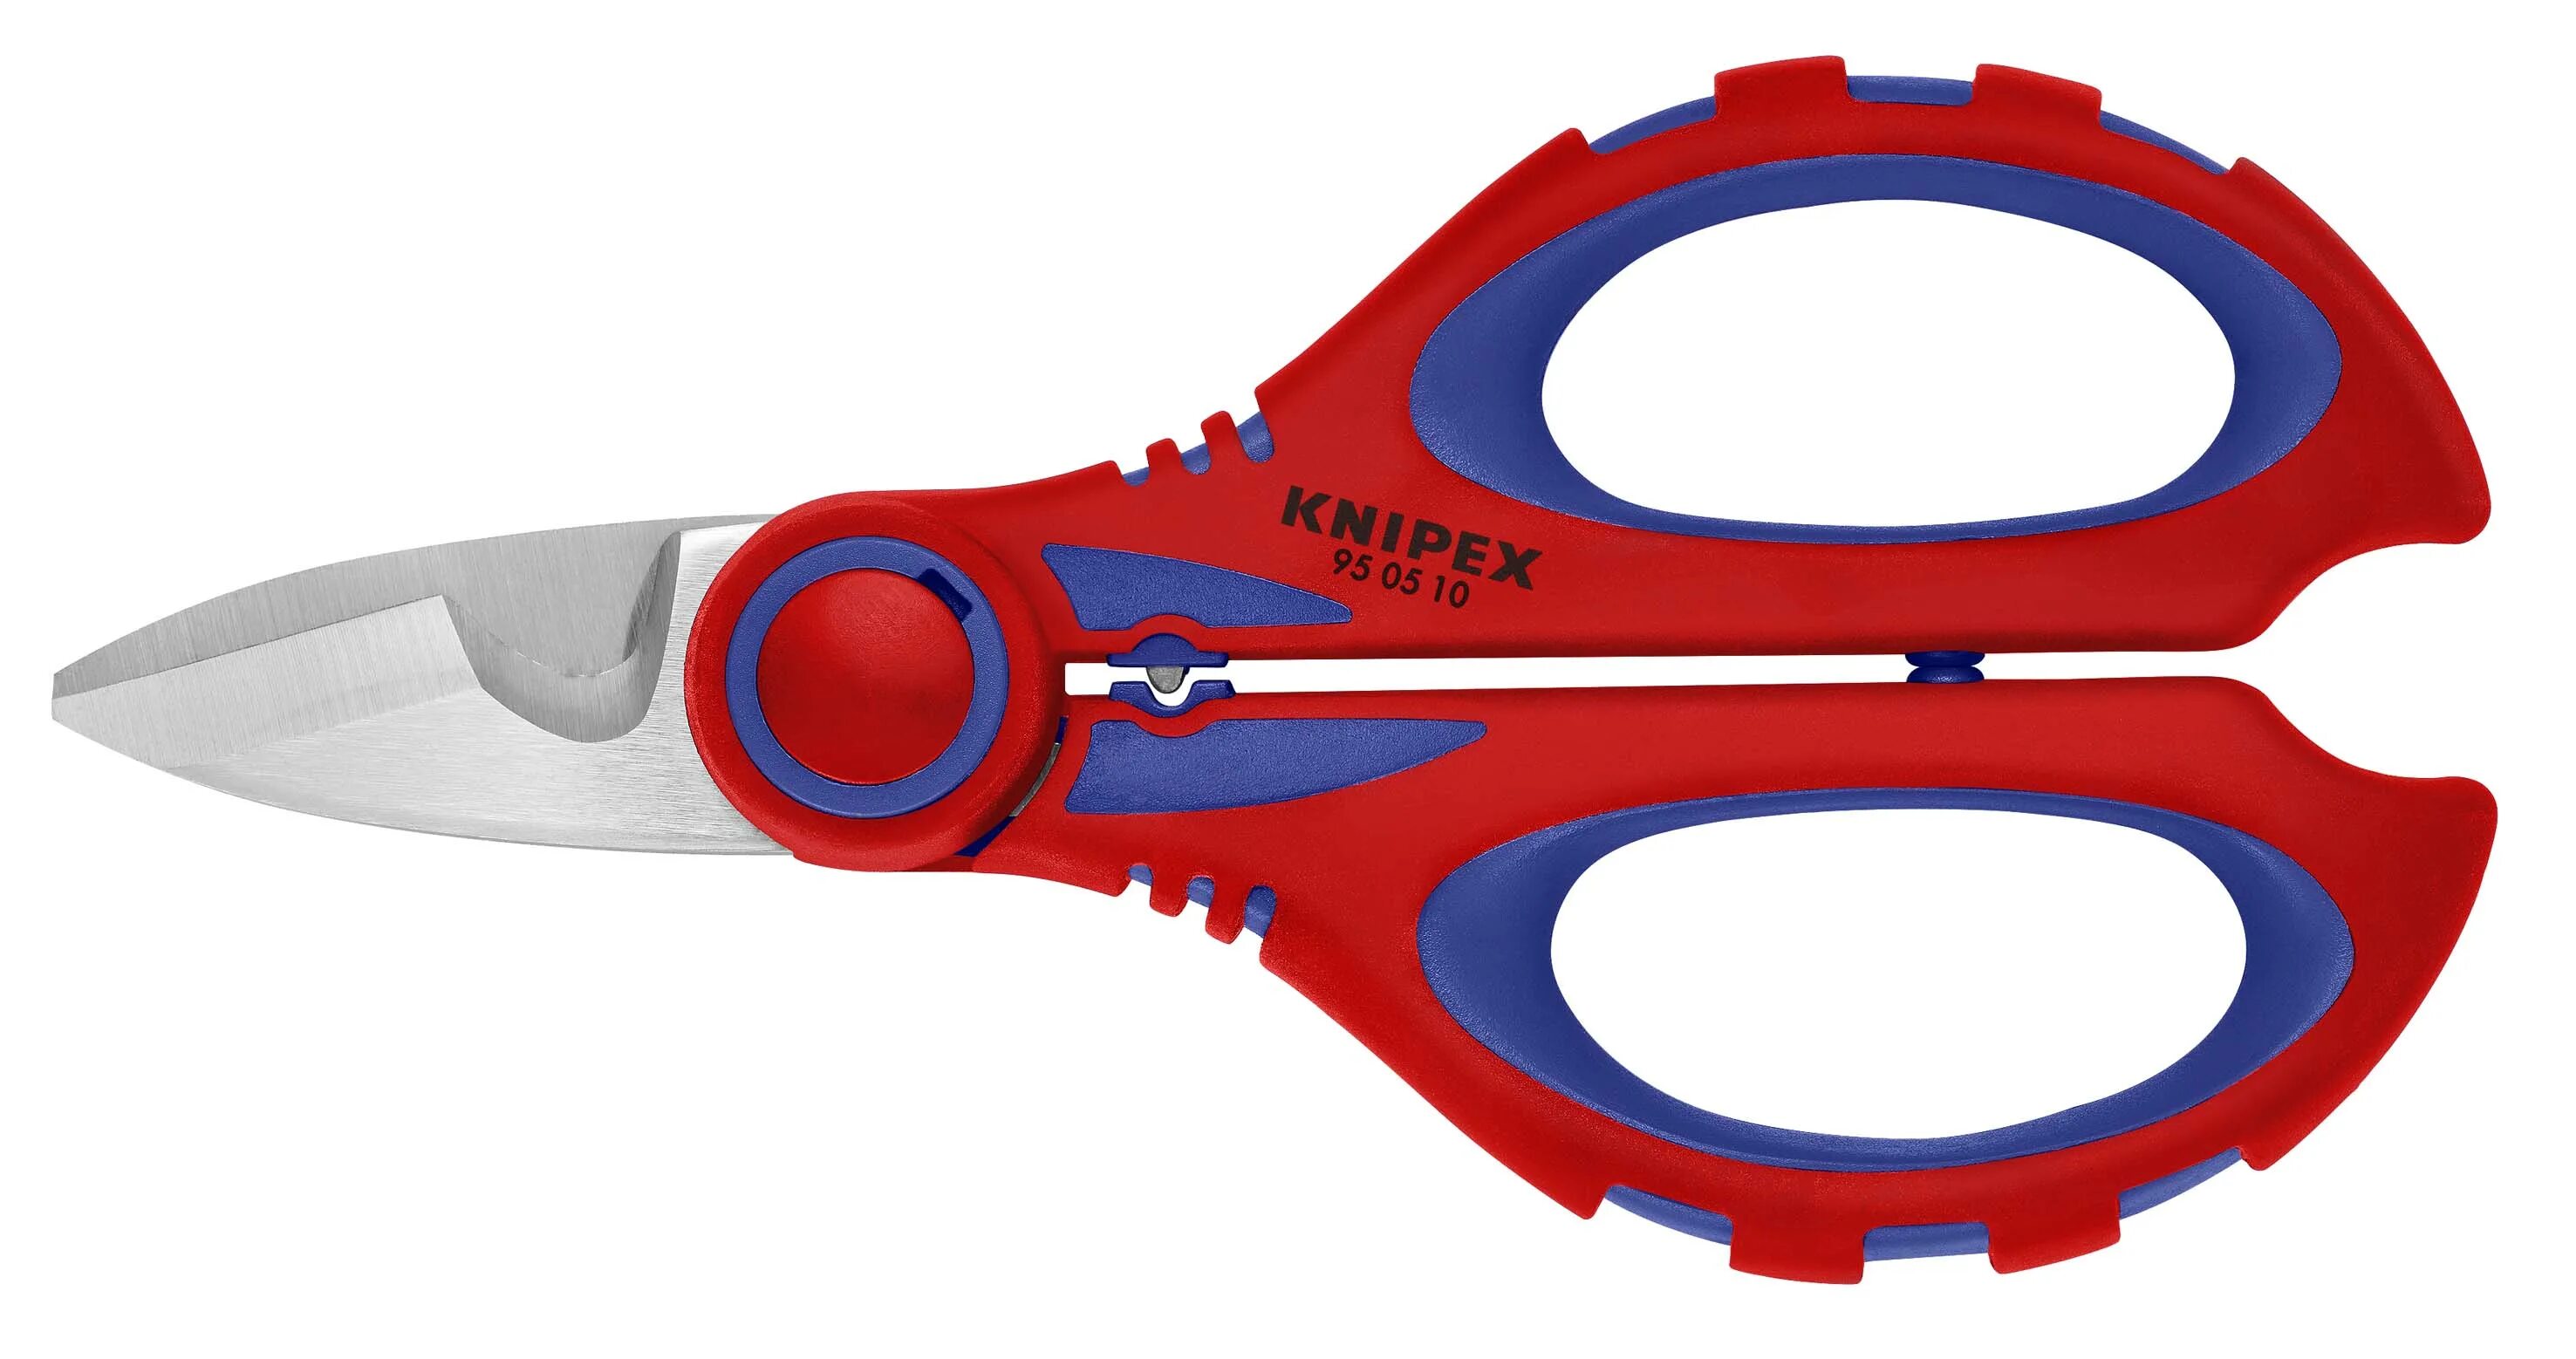 Ножницы электрика Knipex 950510sb. Ножницы электрика 190 mm, KN-950510sb. Knipex KN-950510sb. Кабелерез Knipex KN-9531250.